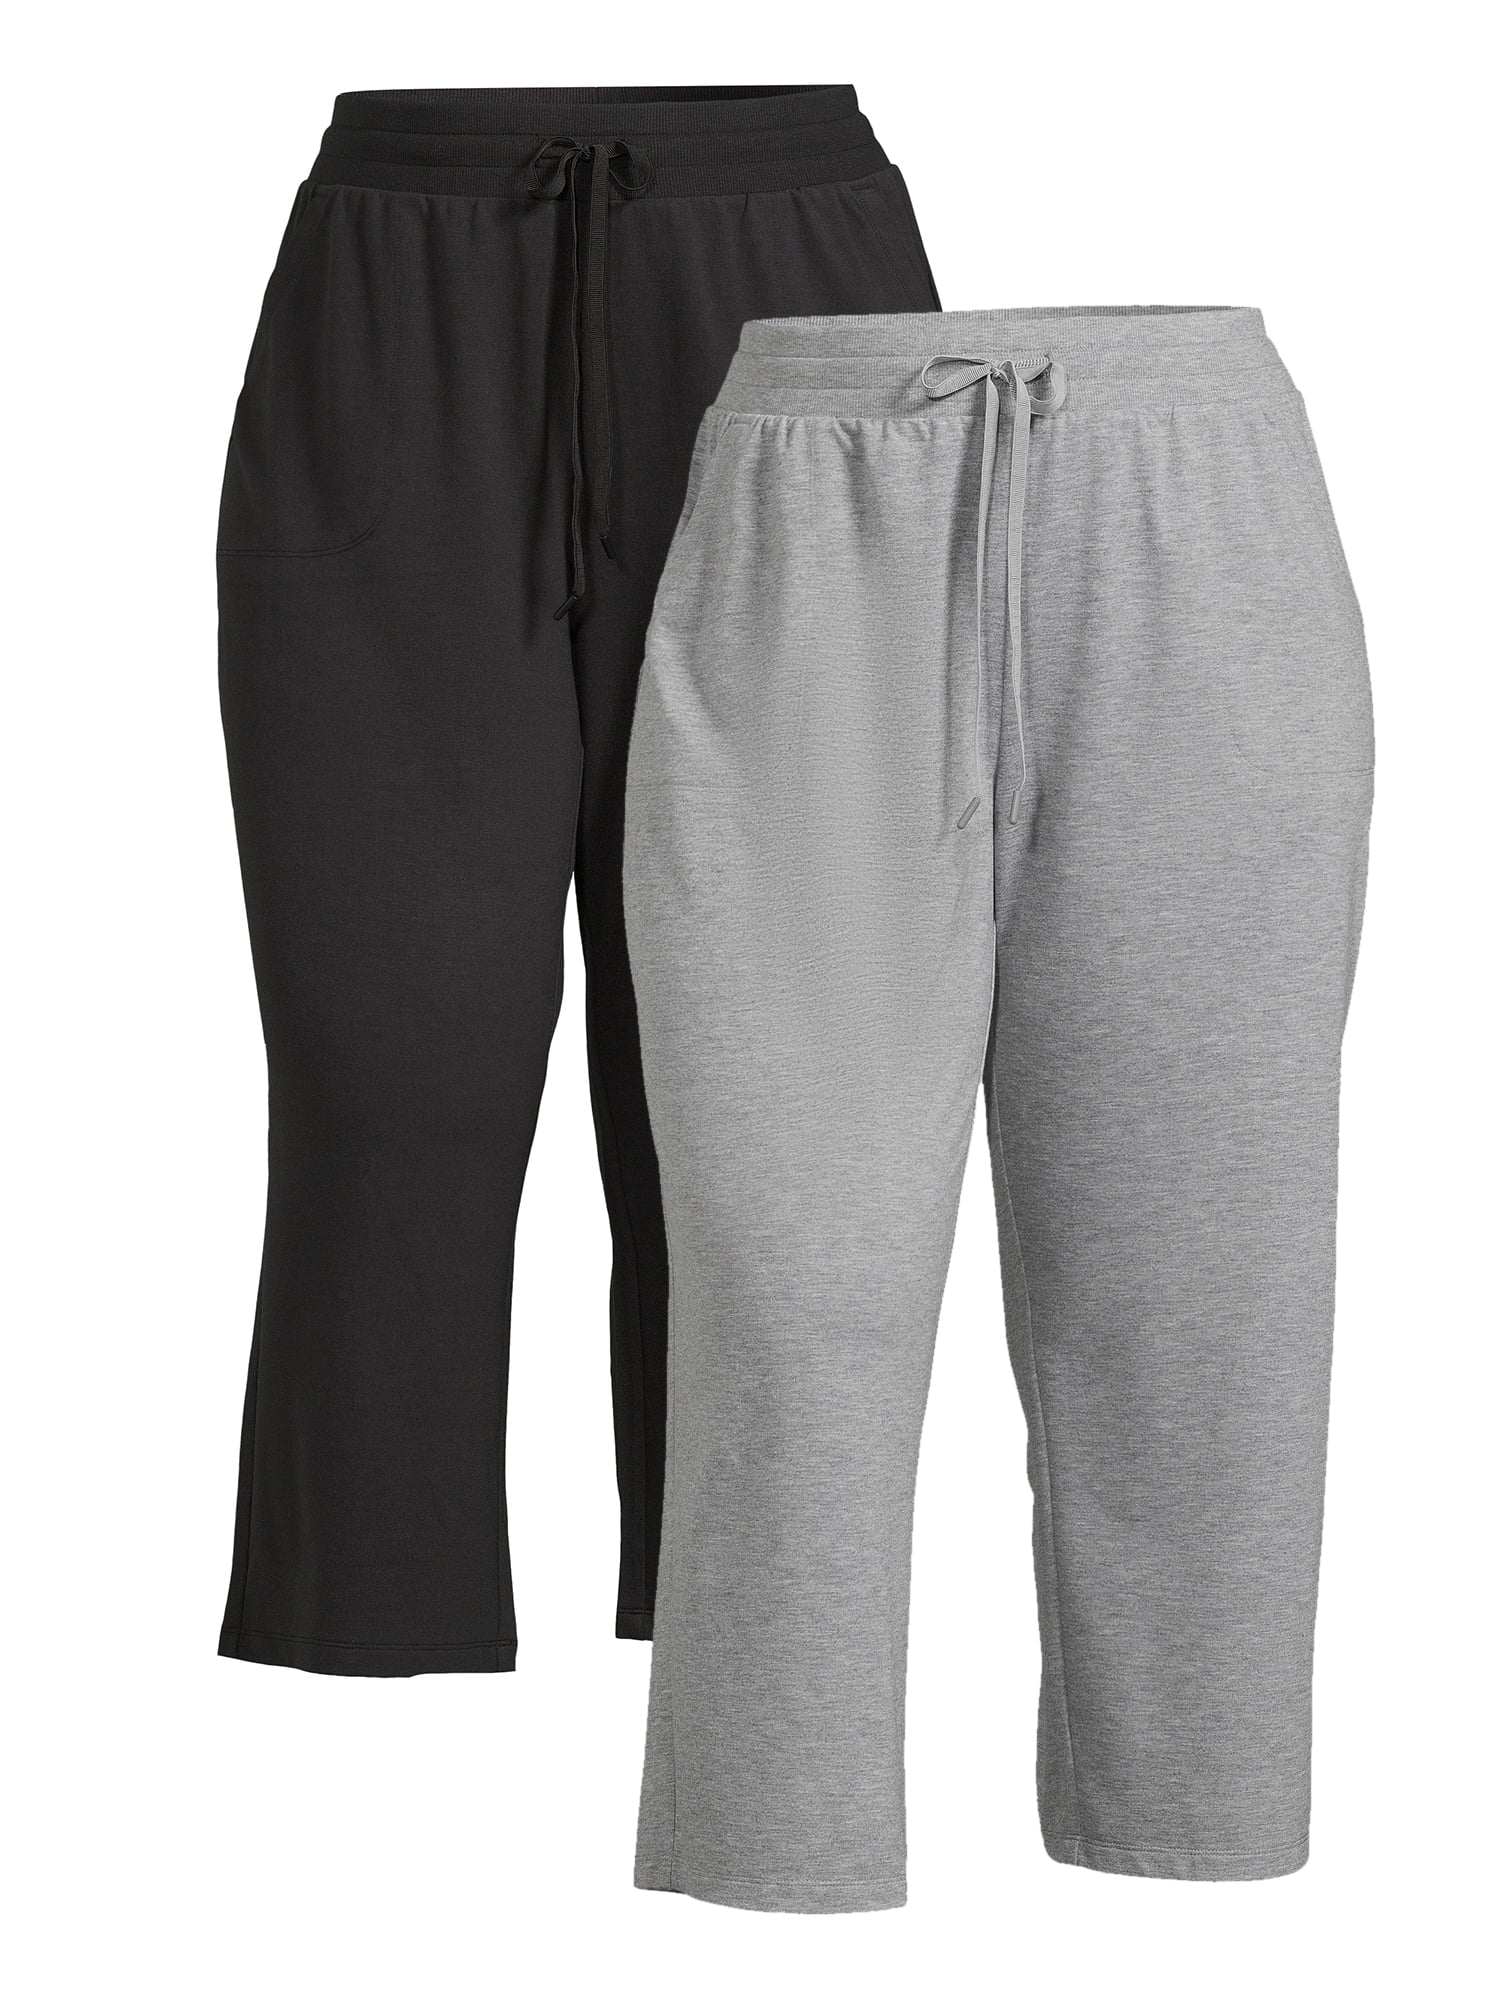 Athletic Works Women's Pull-On Wide Leg Capri Pants, 2-Pack